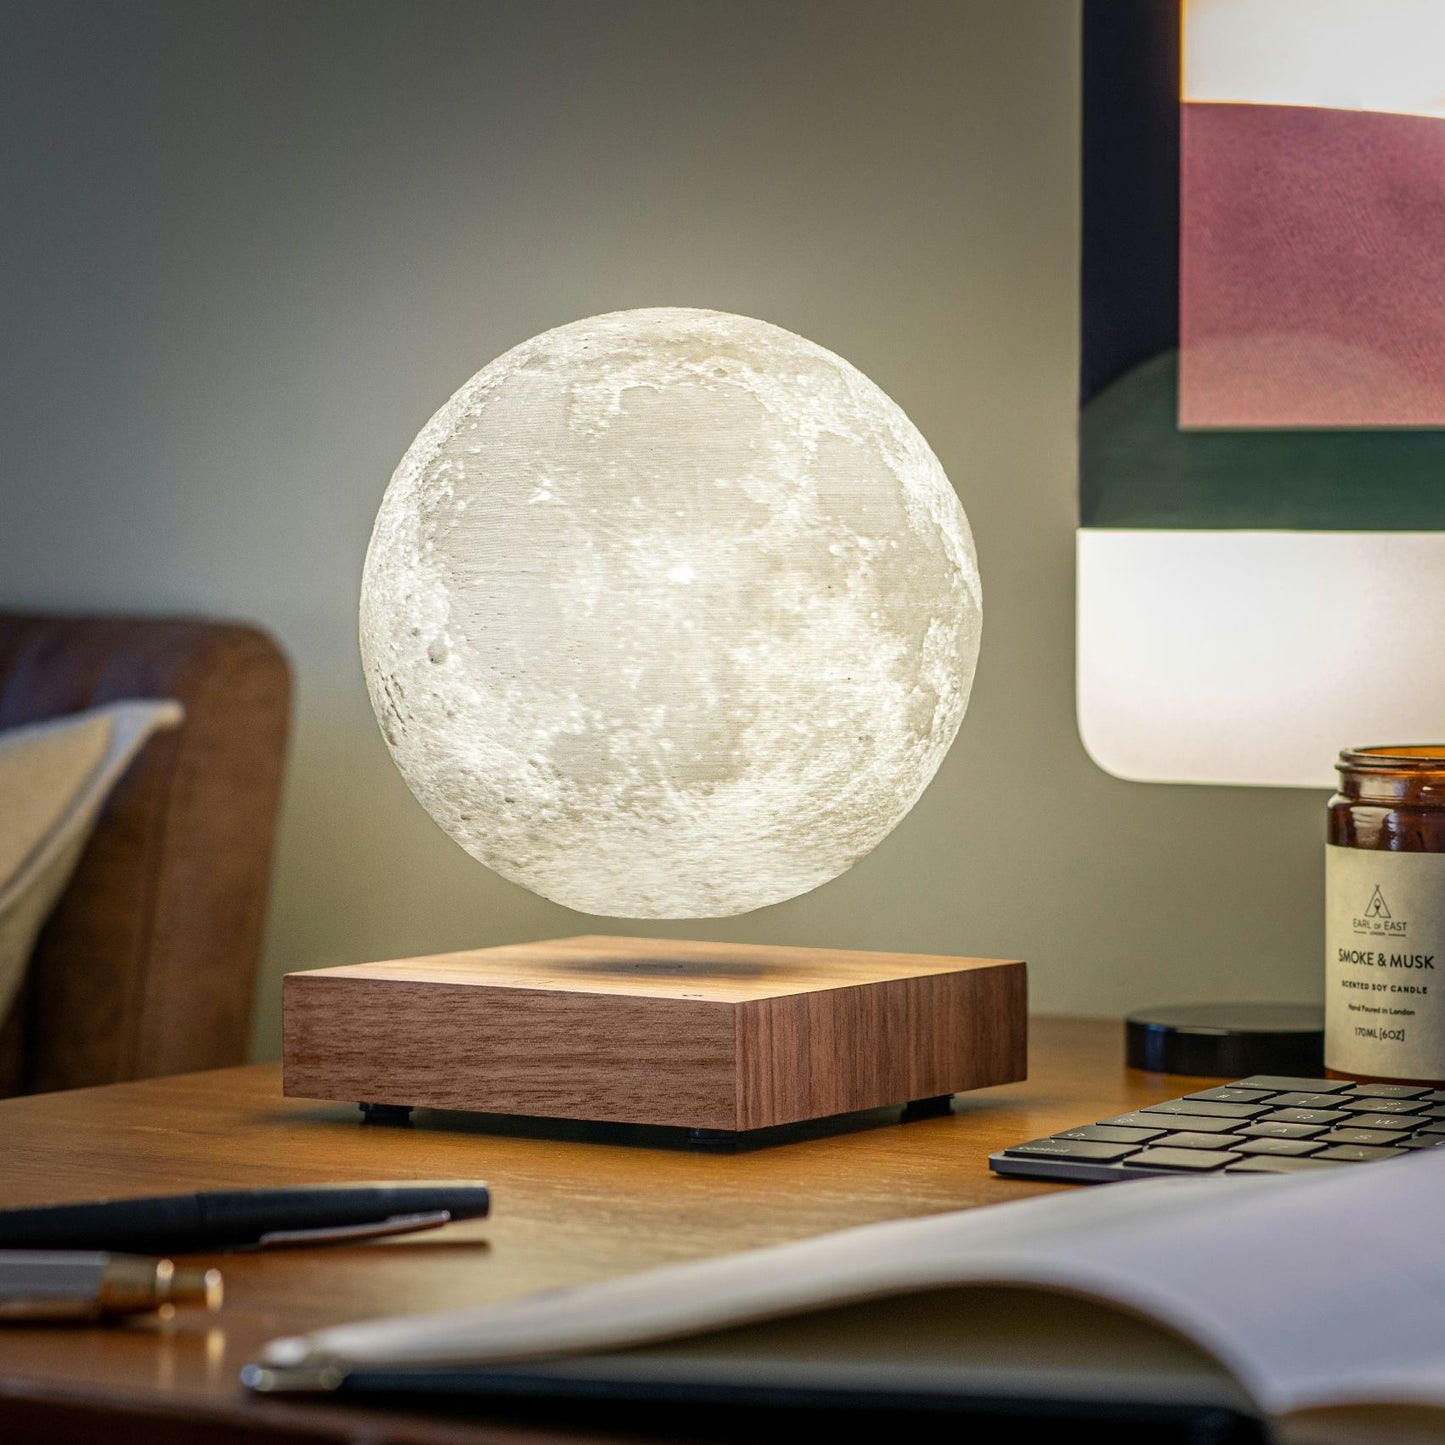 Levitating moon lamp- Display model slightly imperfect